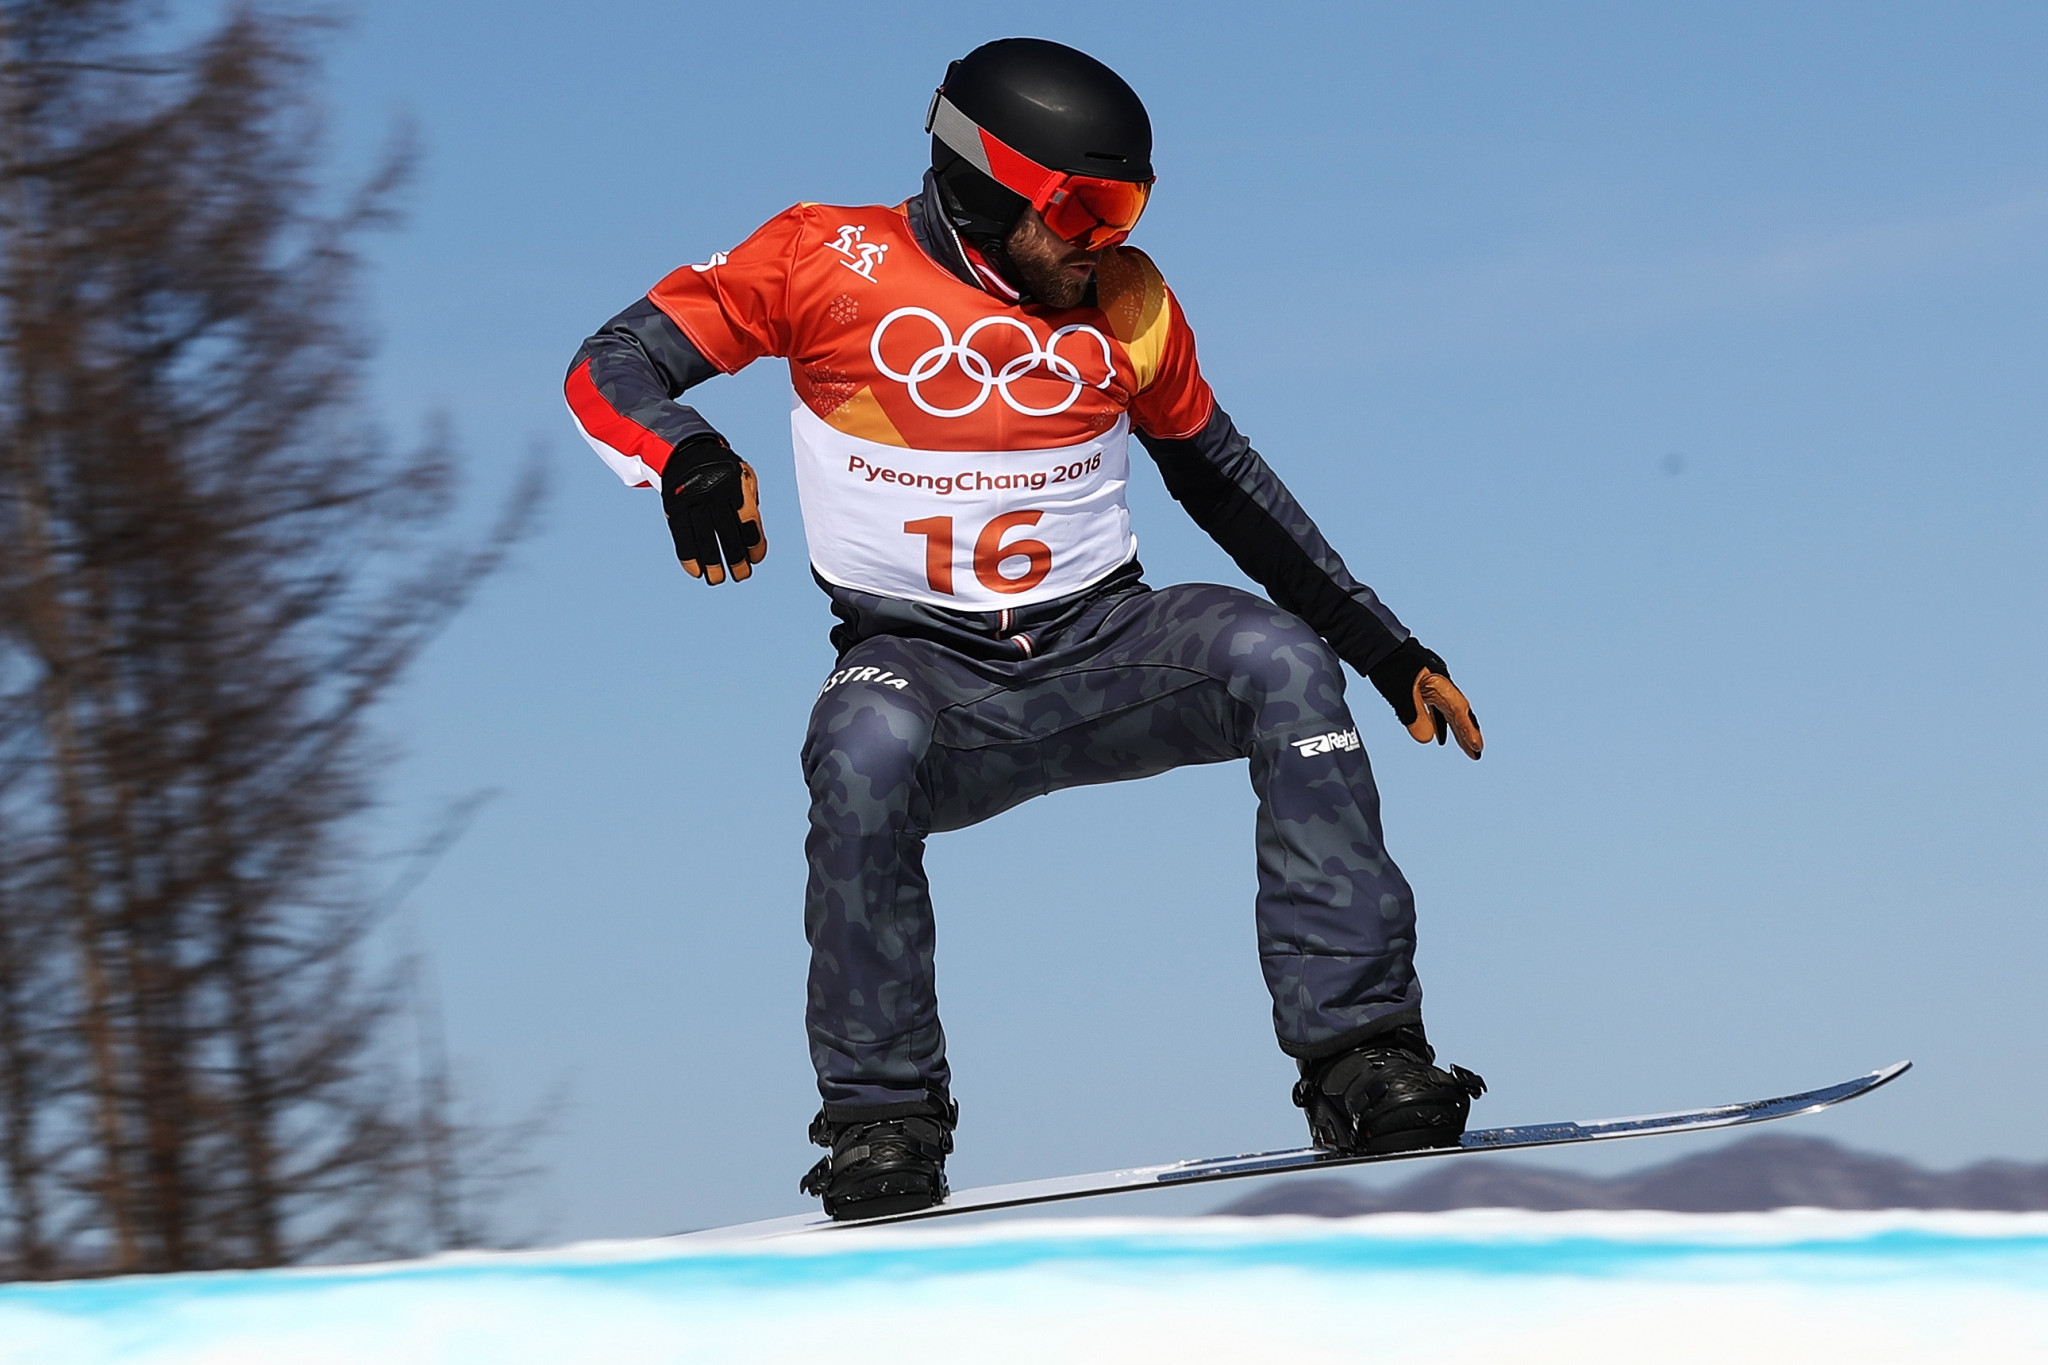 Schairer retires from snowboard cross after broken neck at Pyeongchang 2018